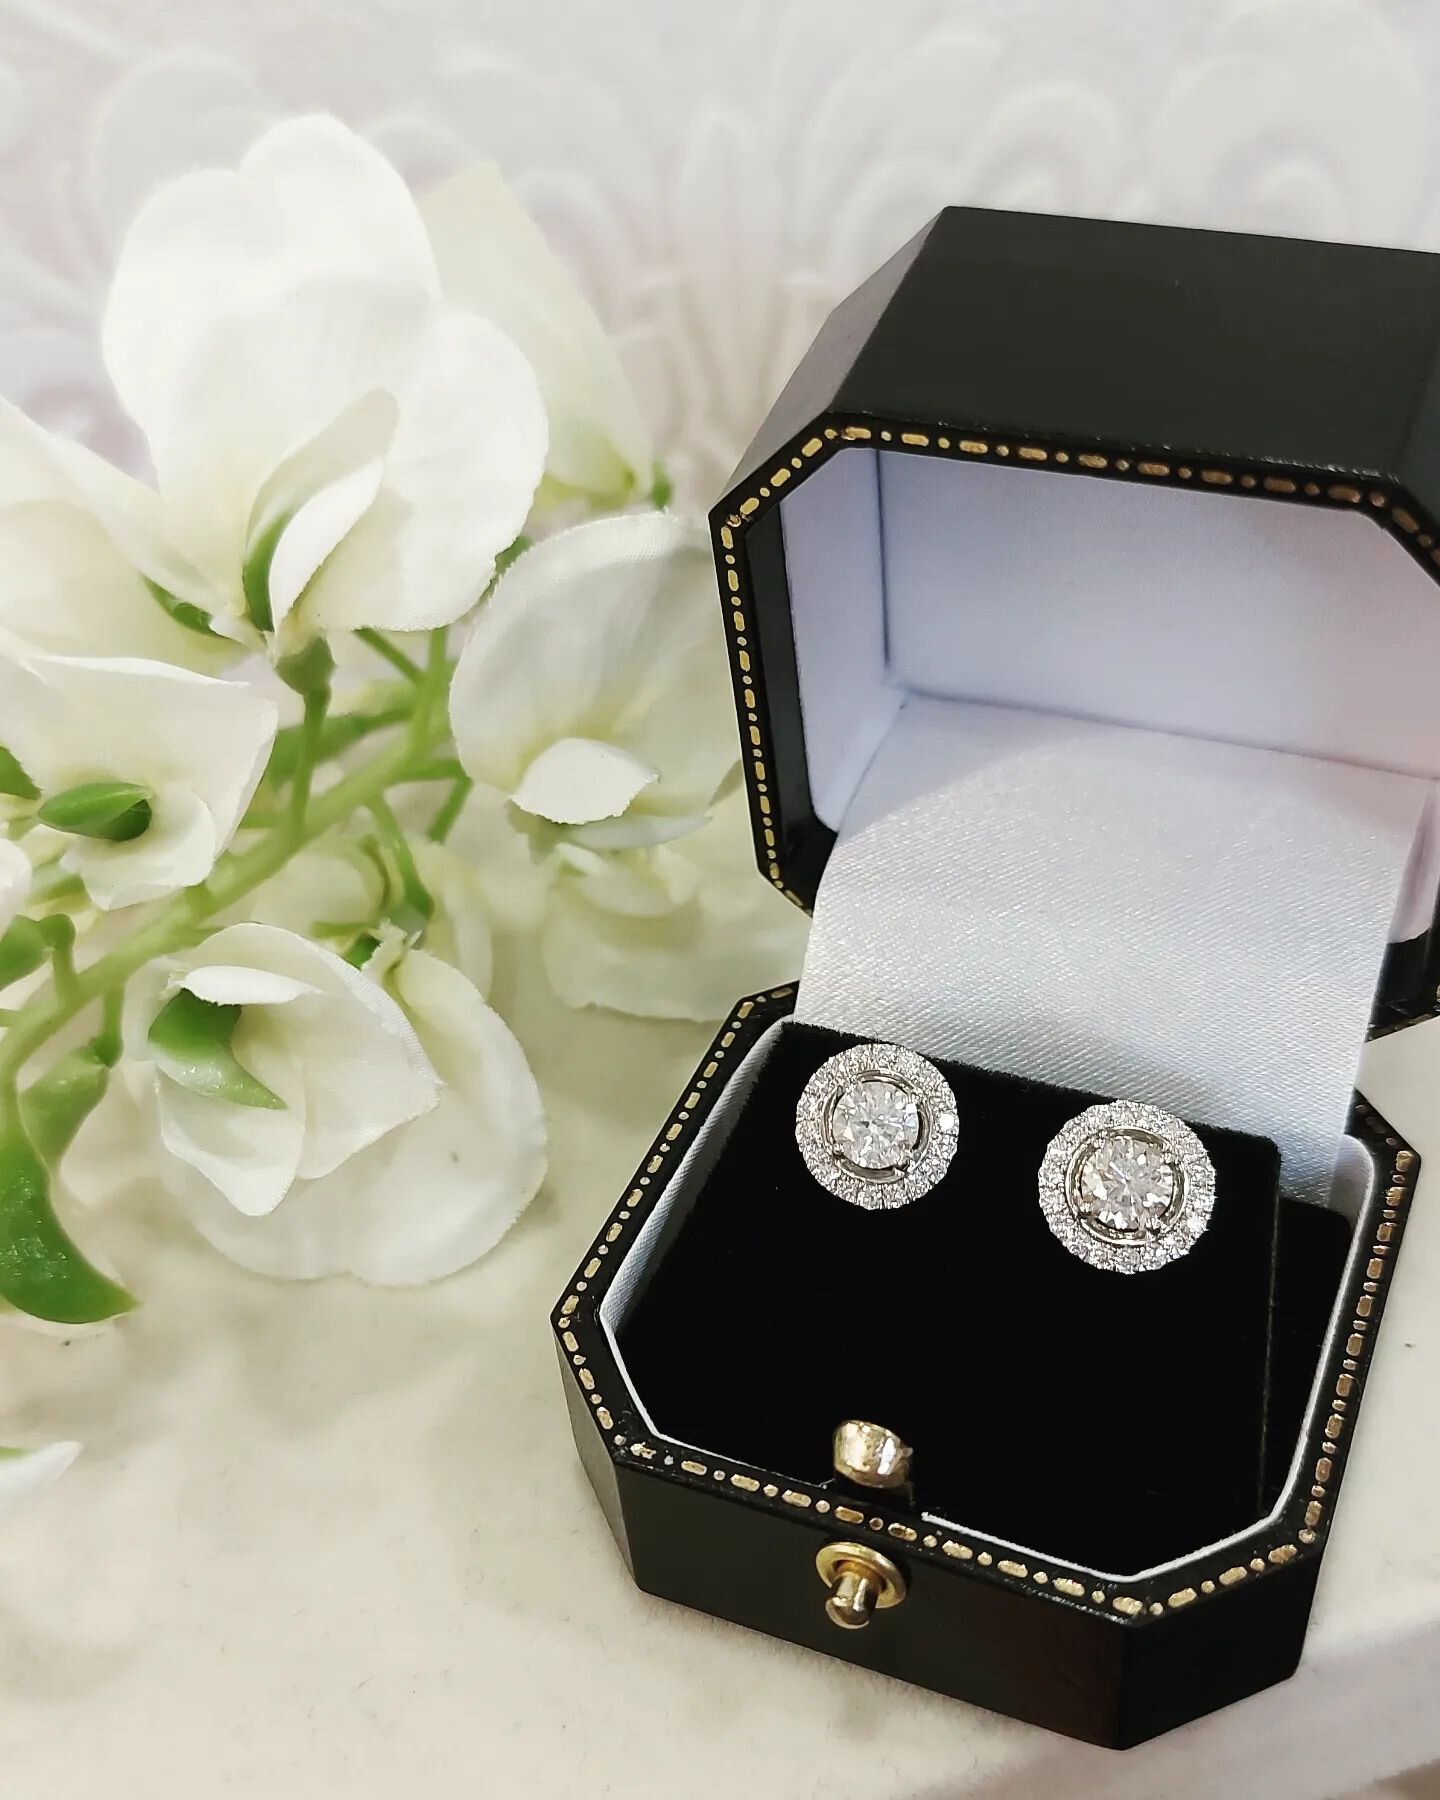 Stunning round brilliant cut diamond halo earrings 💎 
.
.
.
.
#cartersjewellers #lovediamonds #diamondjewellery #diamondspecialist #marketplacebolton #jewellersofbolton #diamondearrings